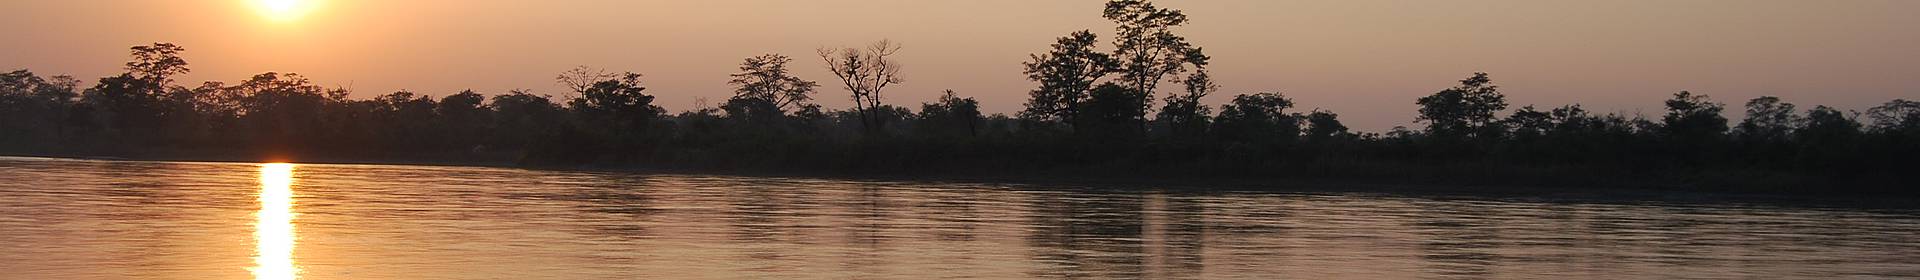 Royal Chitwan National Park